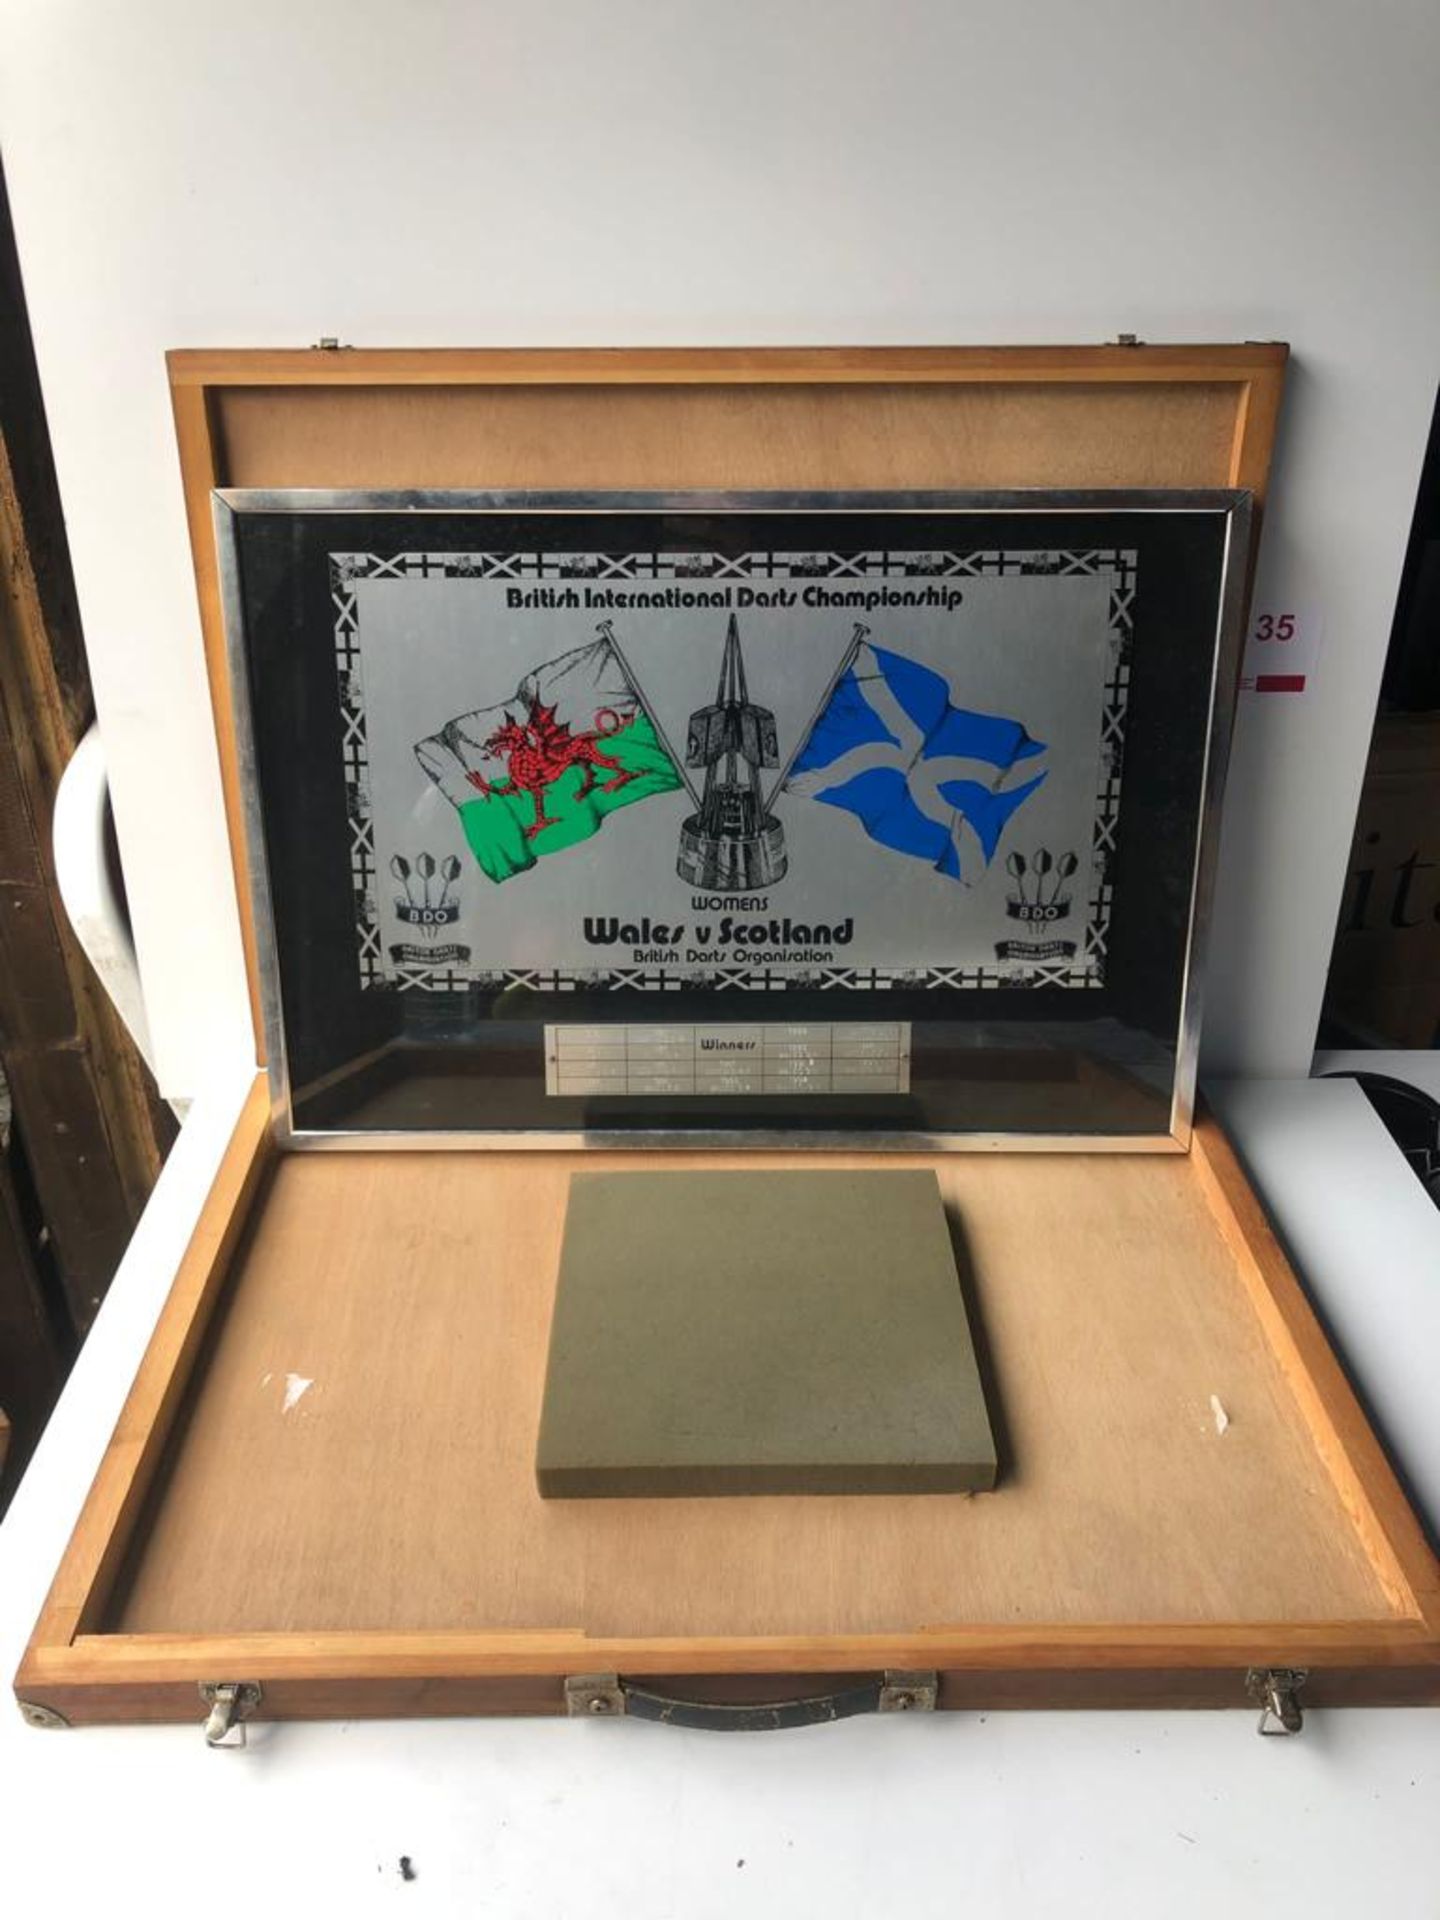 The British International Darts Women's Championship Framed Plaque - Wales vs Scotland